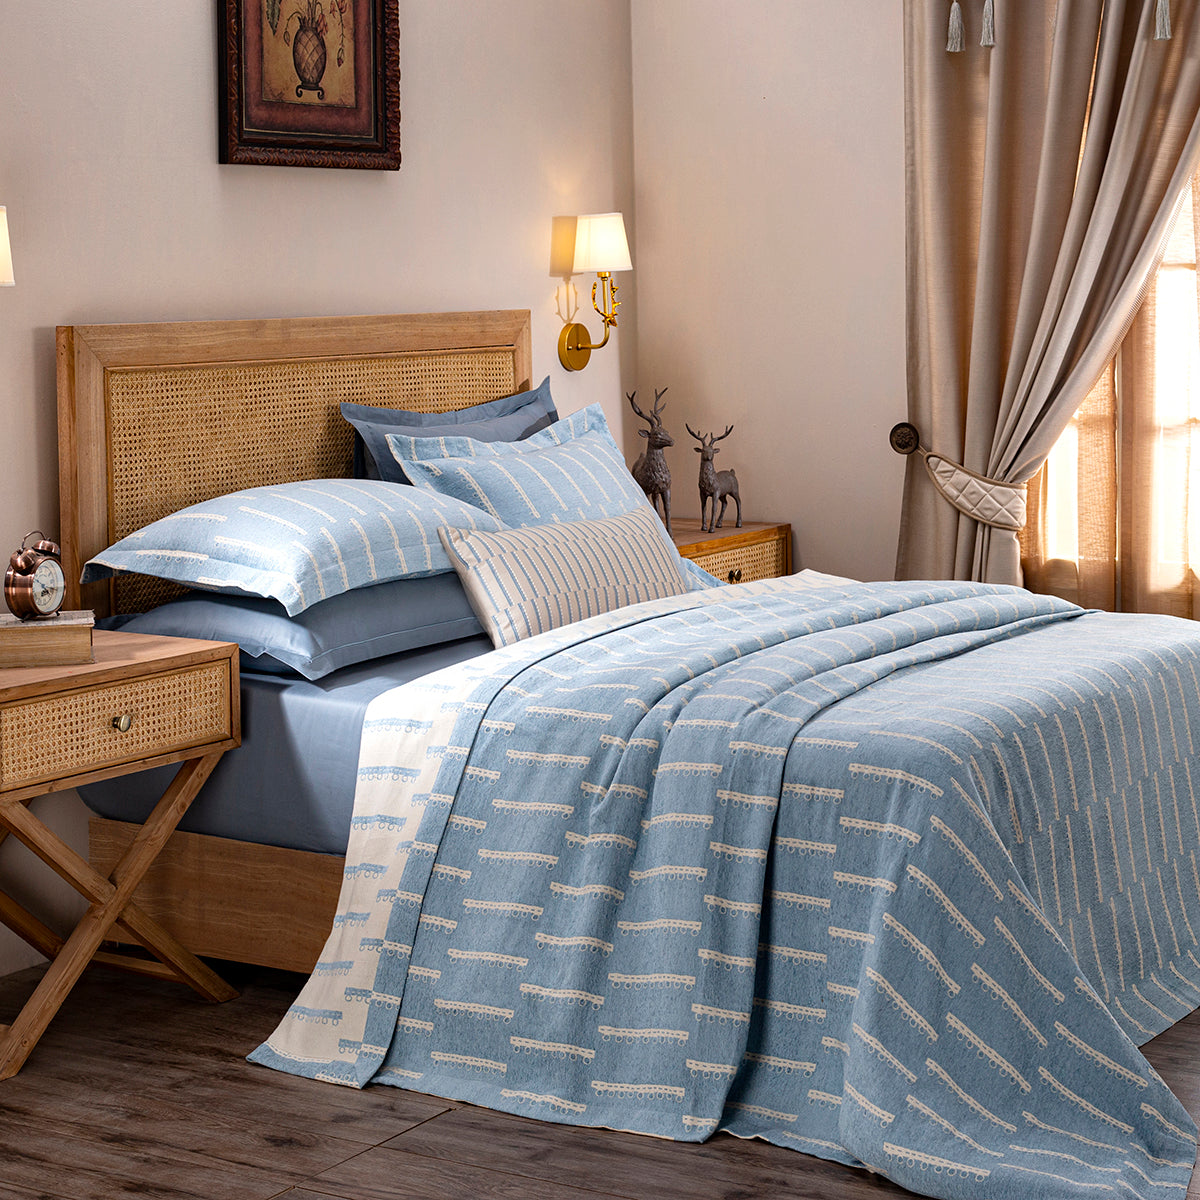 Exotic Heritage Ruler Dot Turquoise Bed Cover/Blanket Set